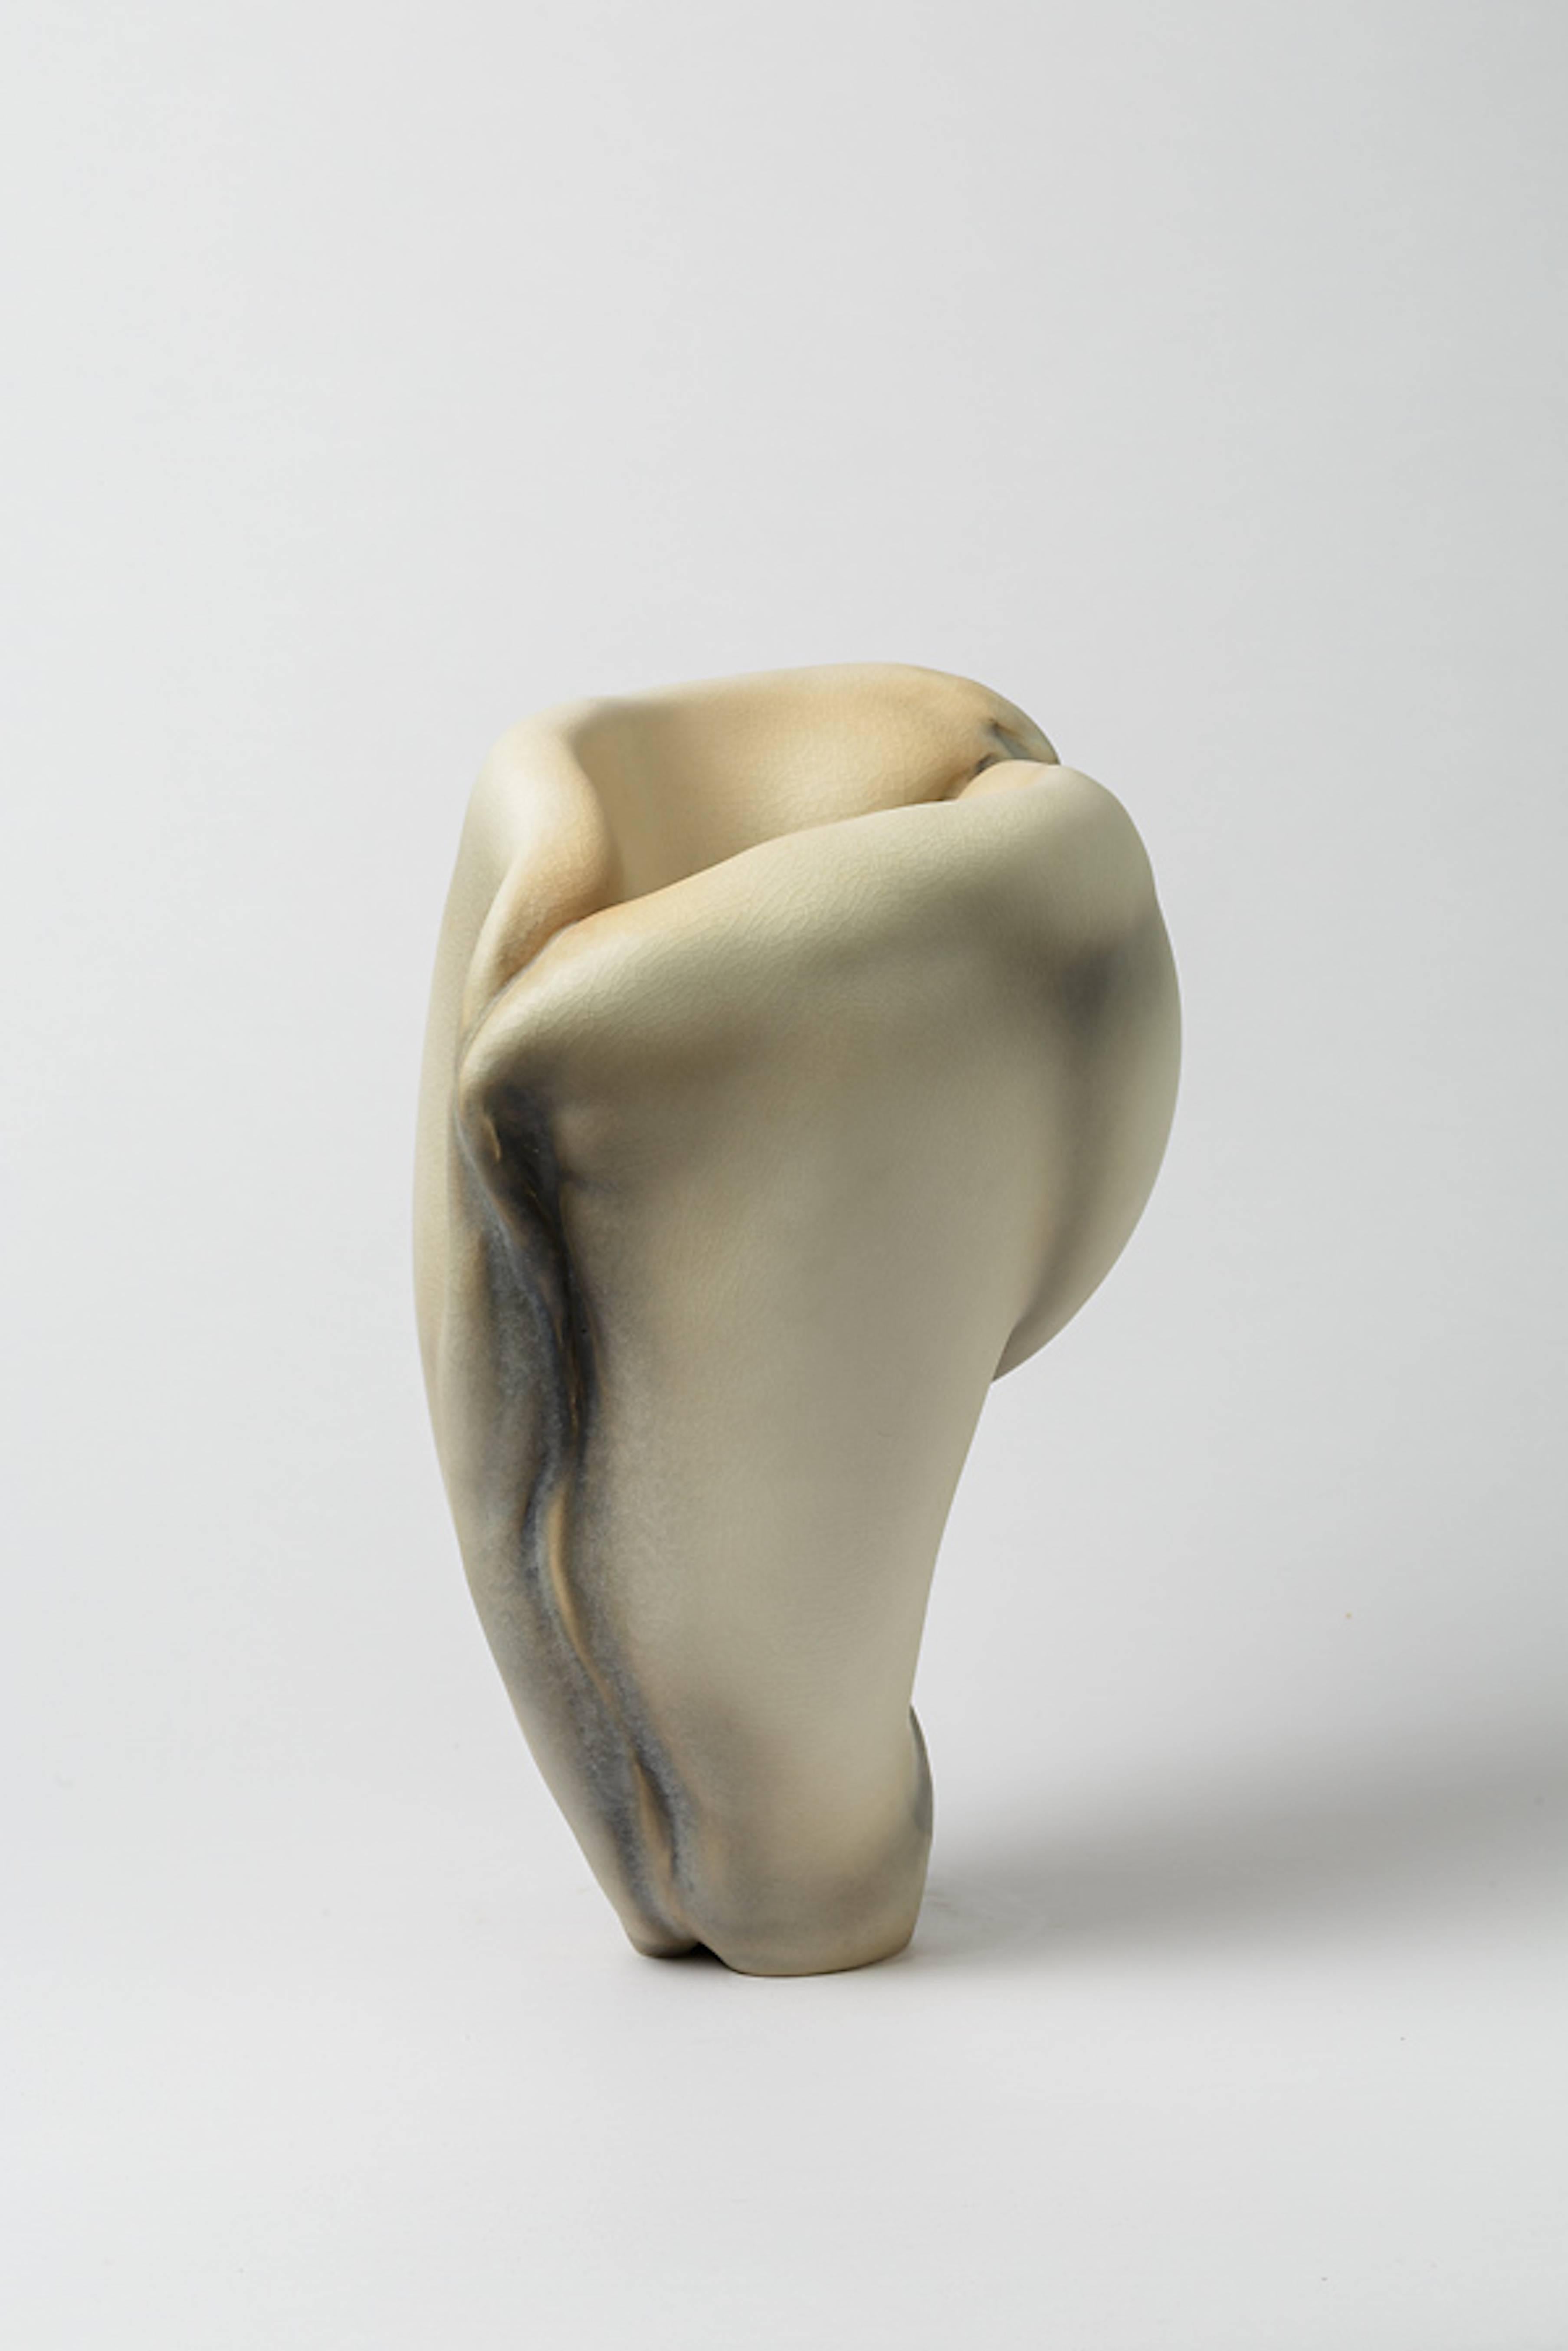 Porcelain Sculpture by Wayne Fischer, French-American, circa 2016 (Beaux Arts)